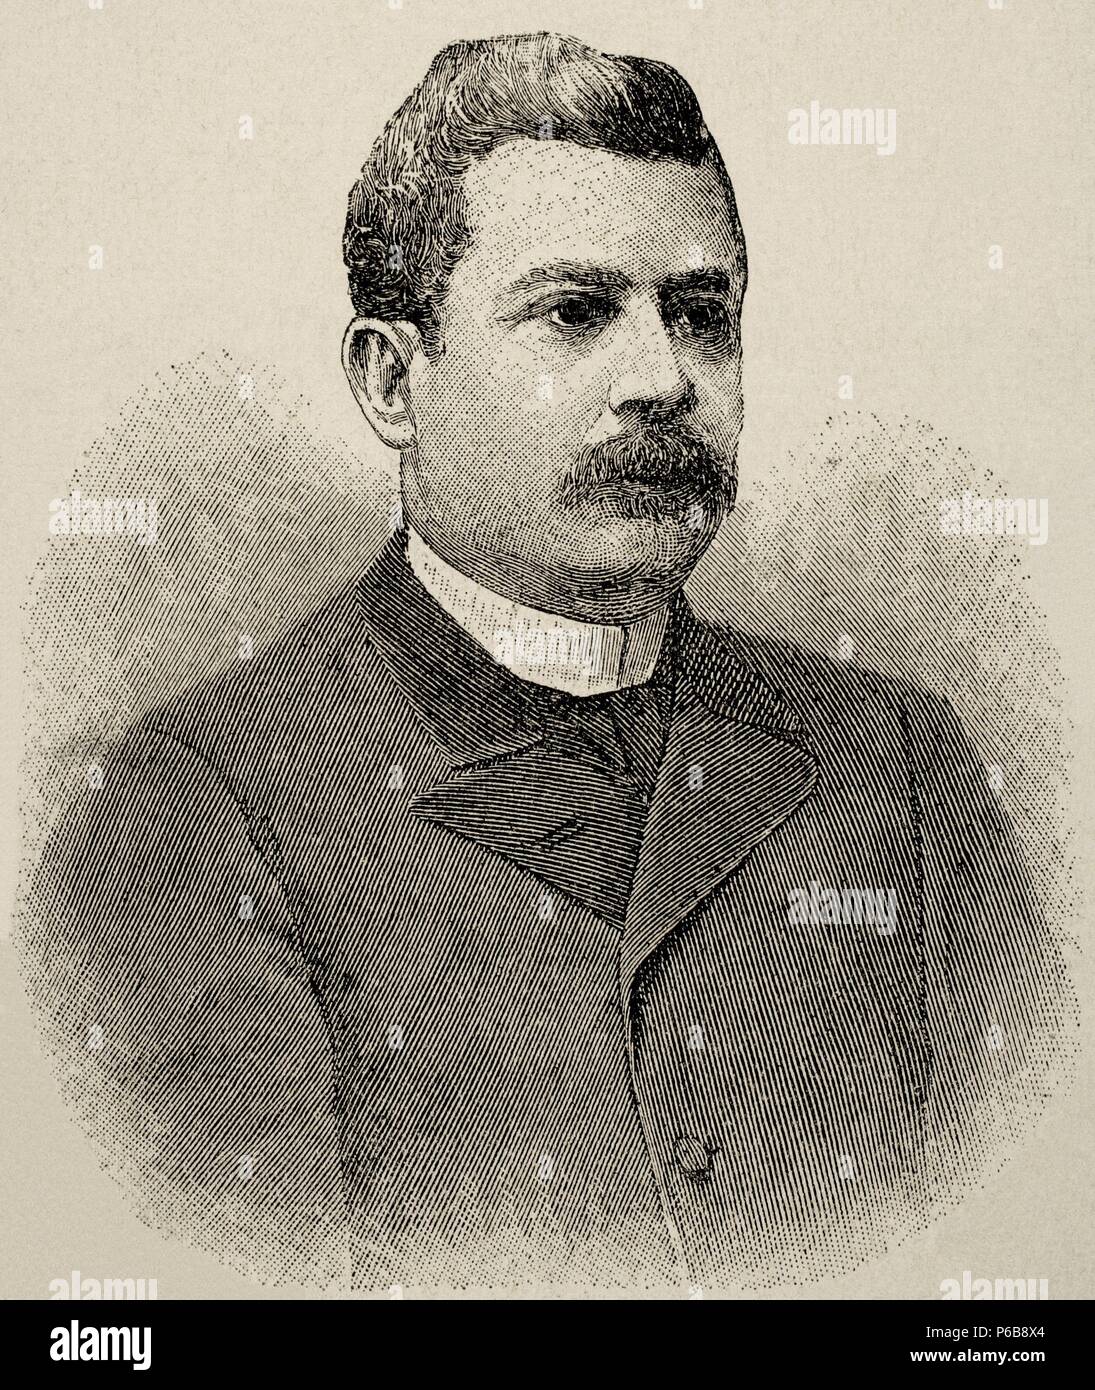 Juan Isidro Jimenes Pereyra (1846Ð1919), Dominican politician. President of the Dominican Republic between 1899-1902 and 1914-1916. Portrait. Engraving. 'La Ilustracion Artistica', 1899. Stock Photo